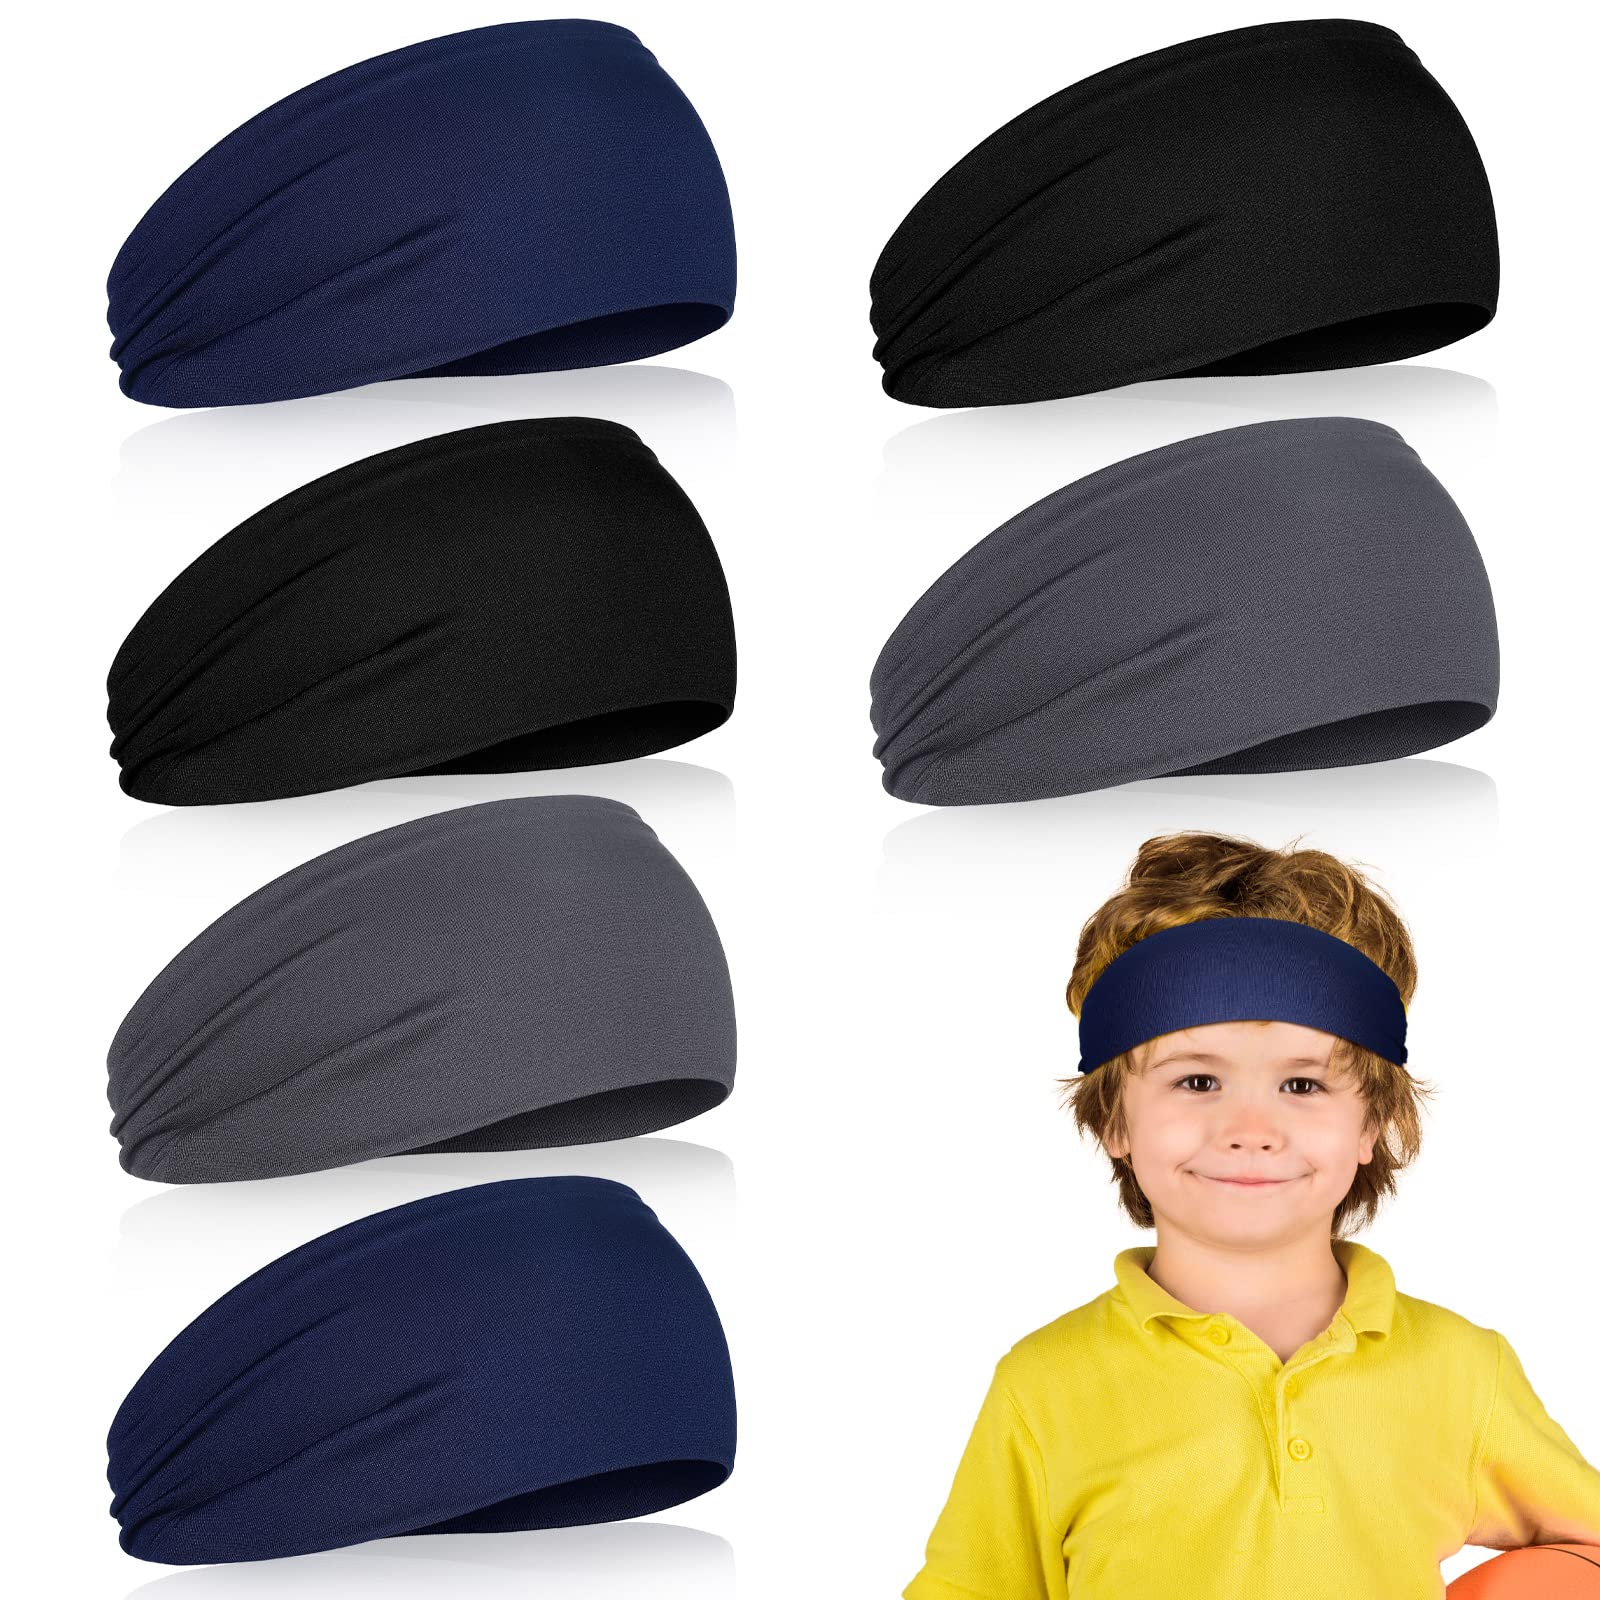 6 Pcs Kids Boys Headbands Athletic Sweatbands Boys Headbands for